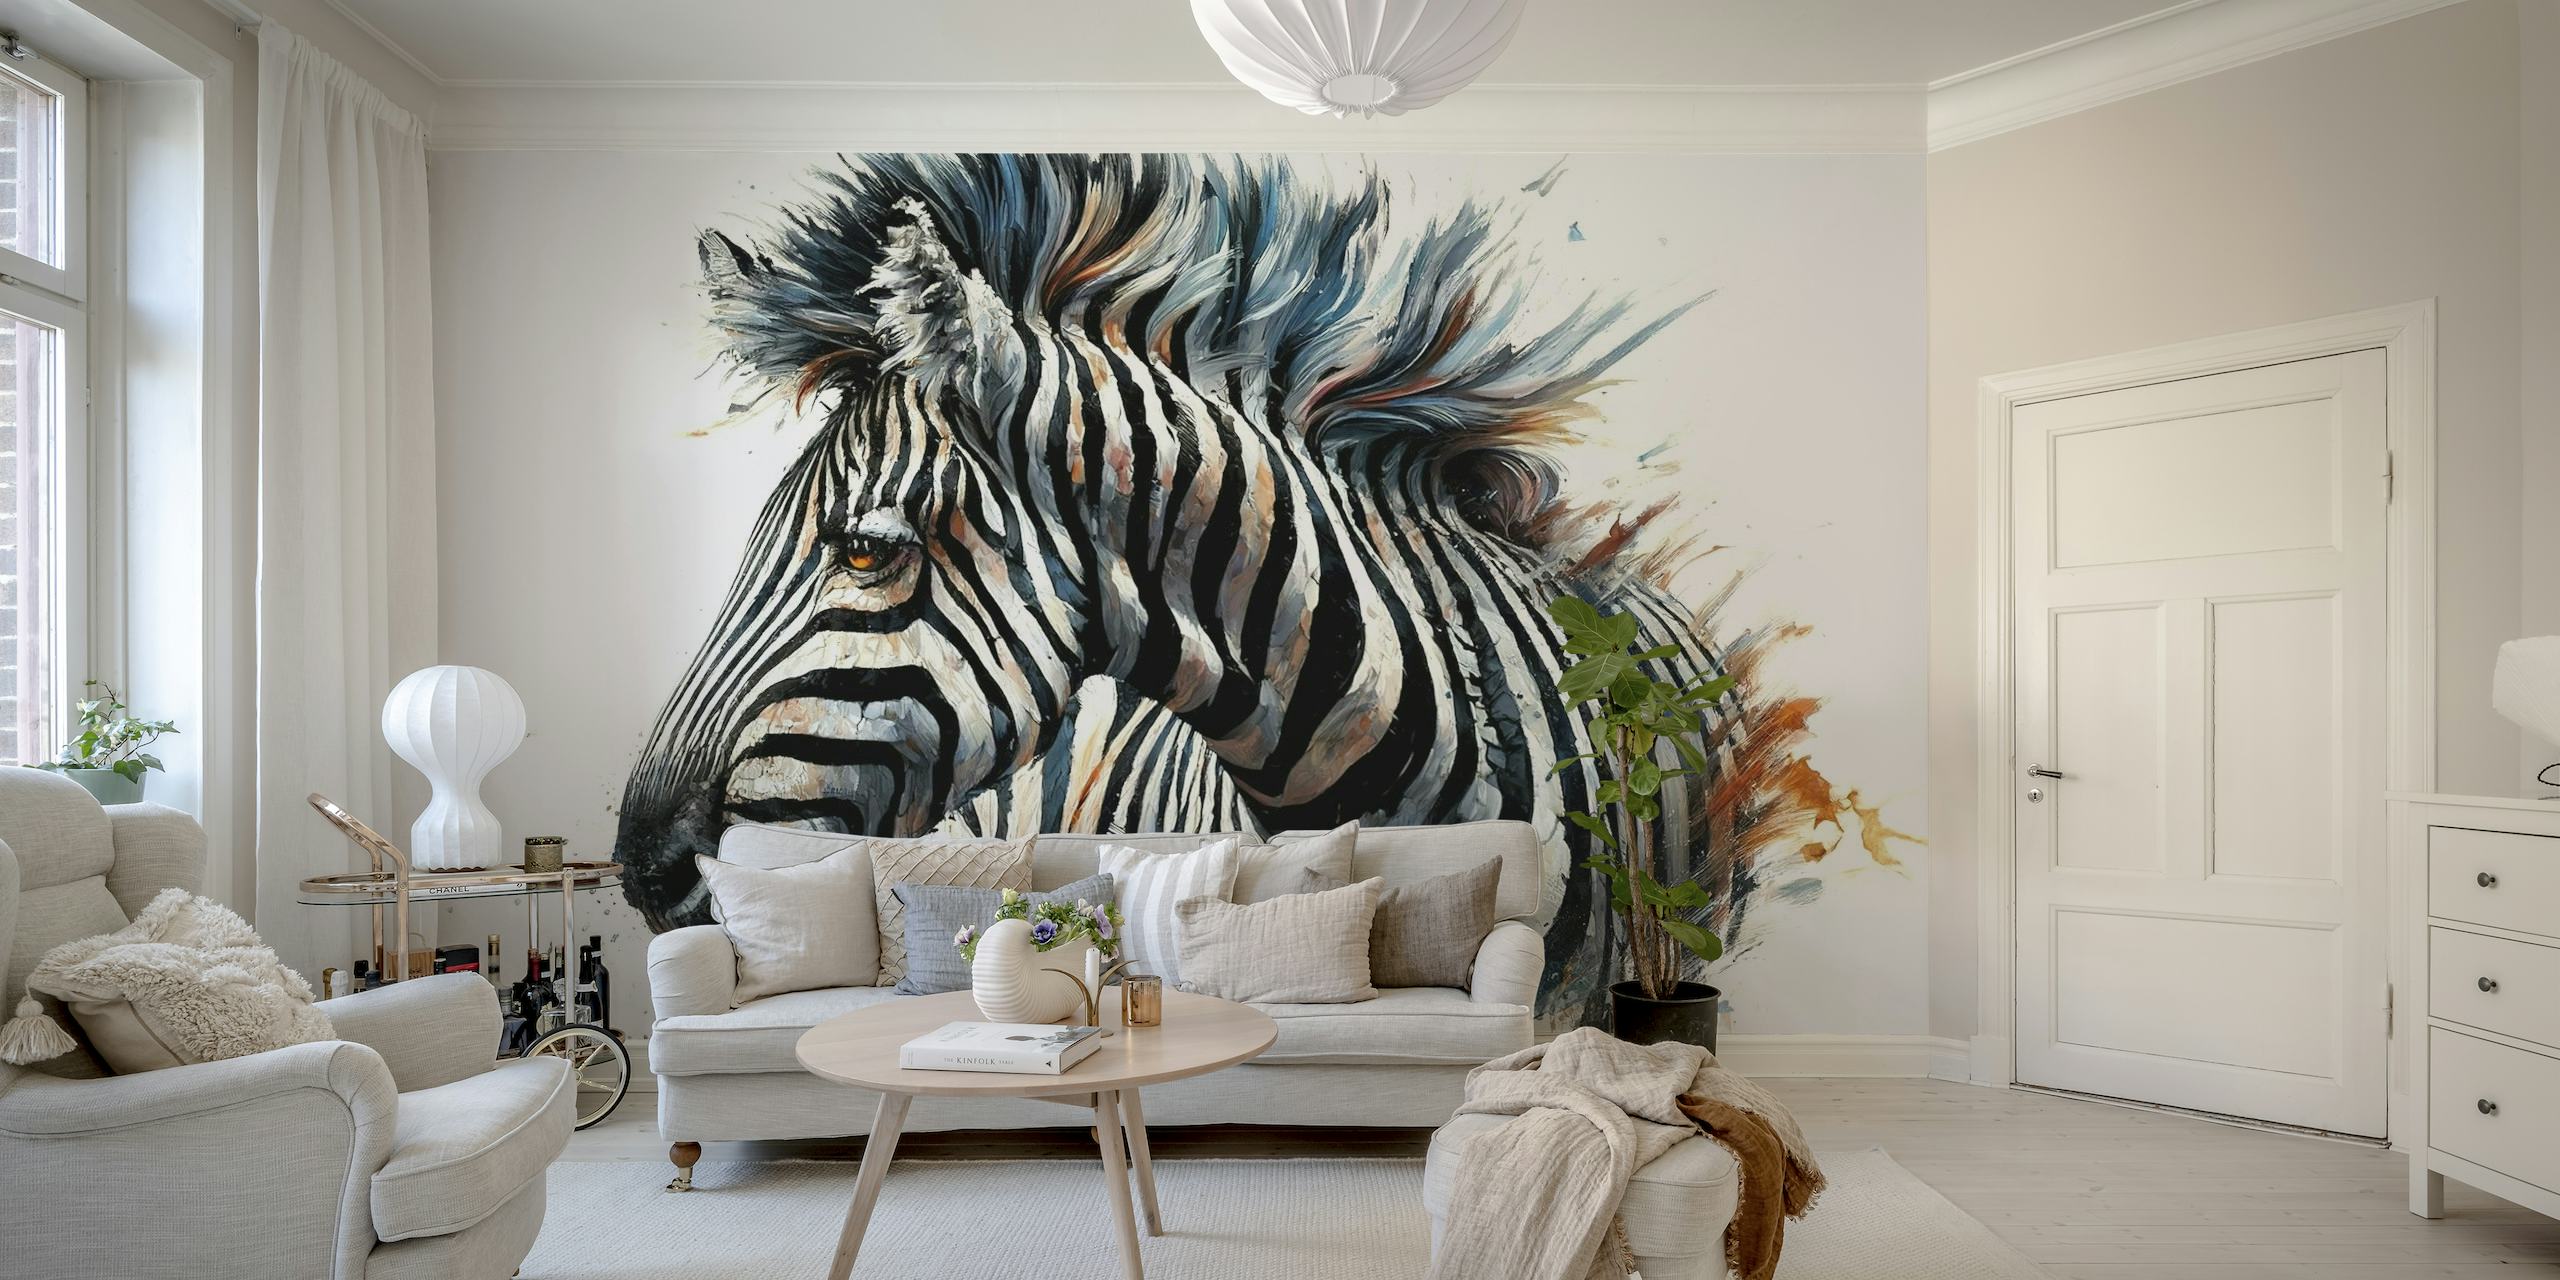 Ethereal Zebra in a Watercolor Dream papel pintado